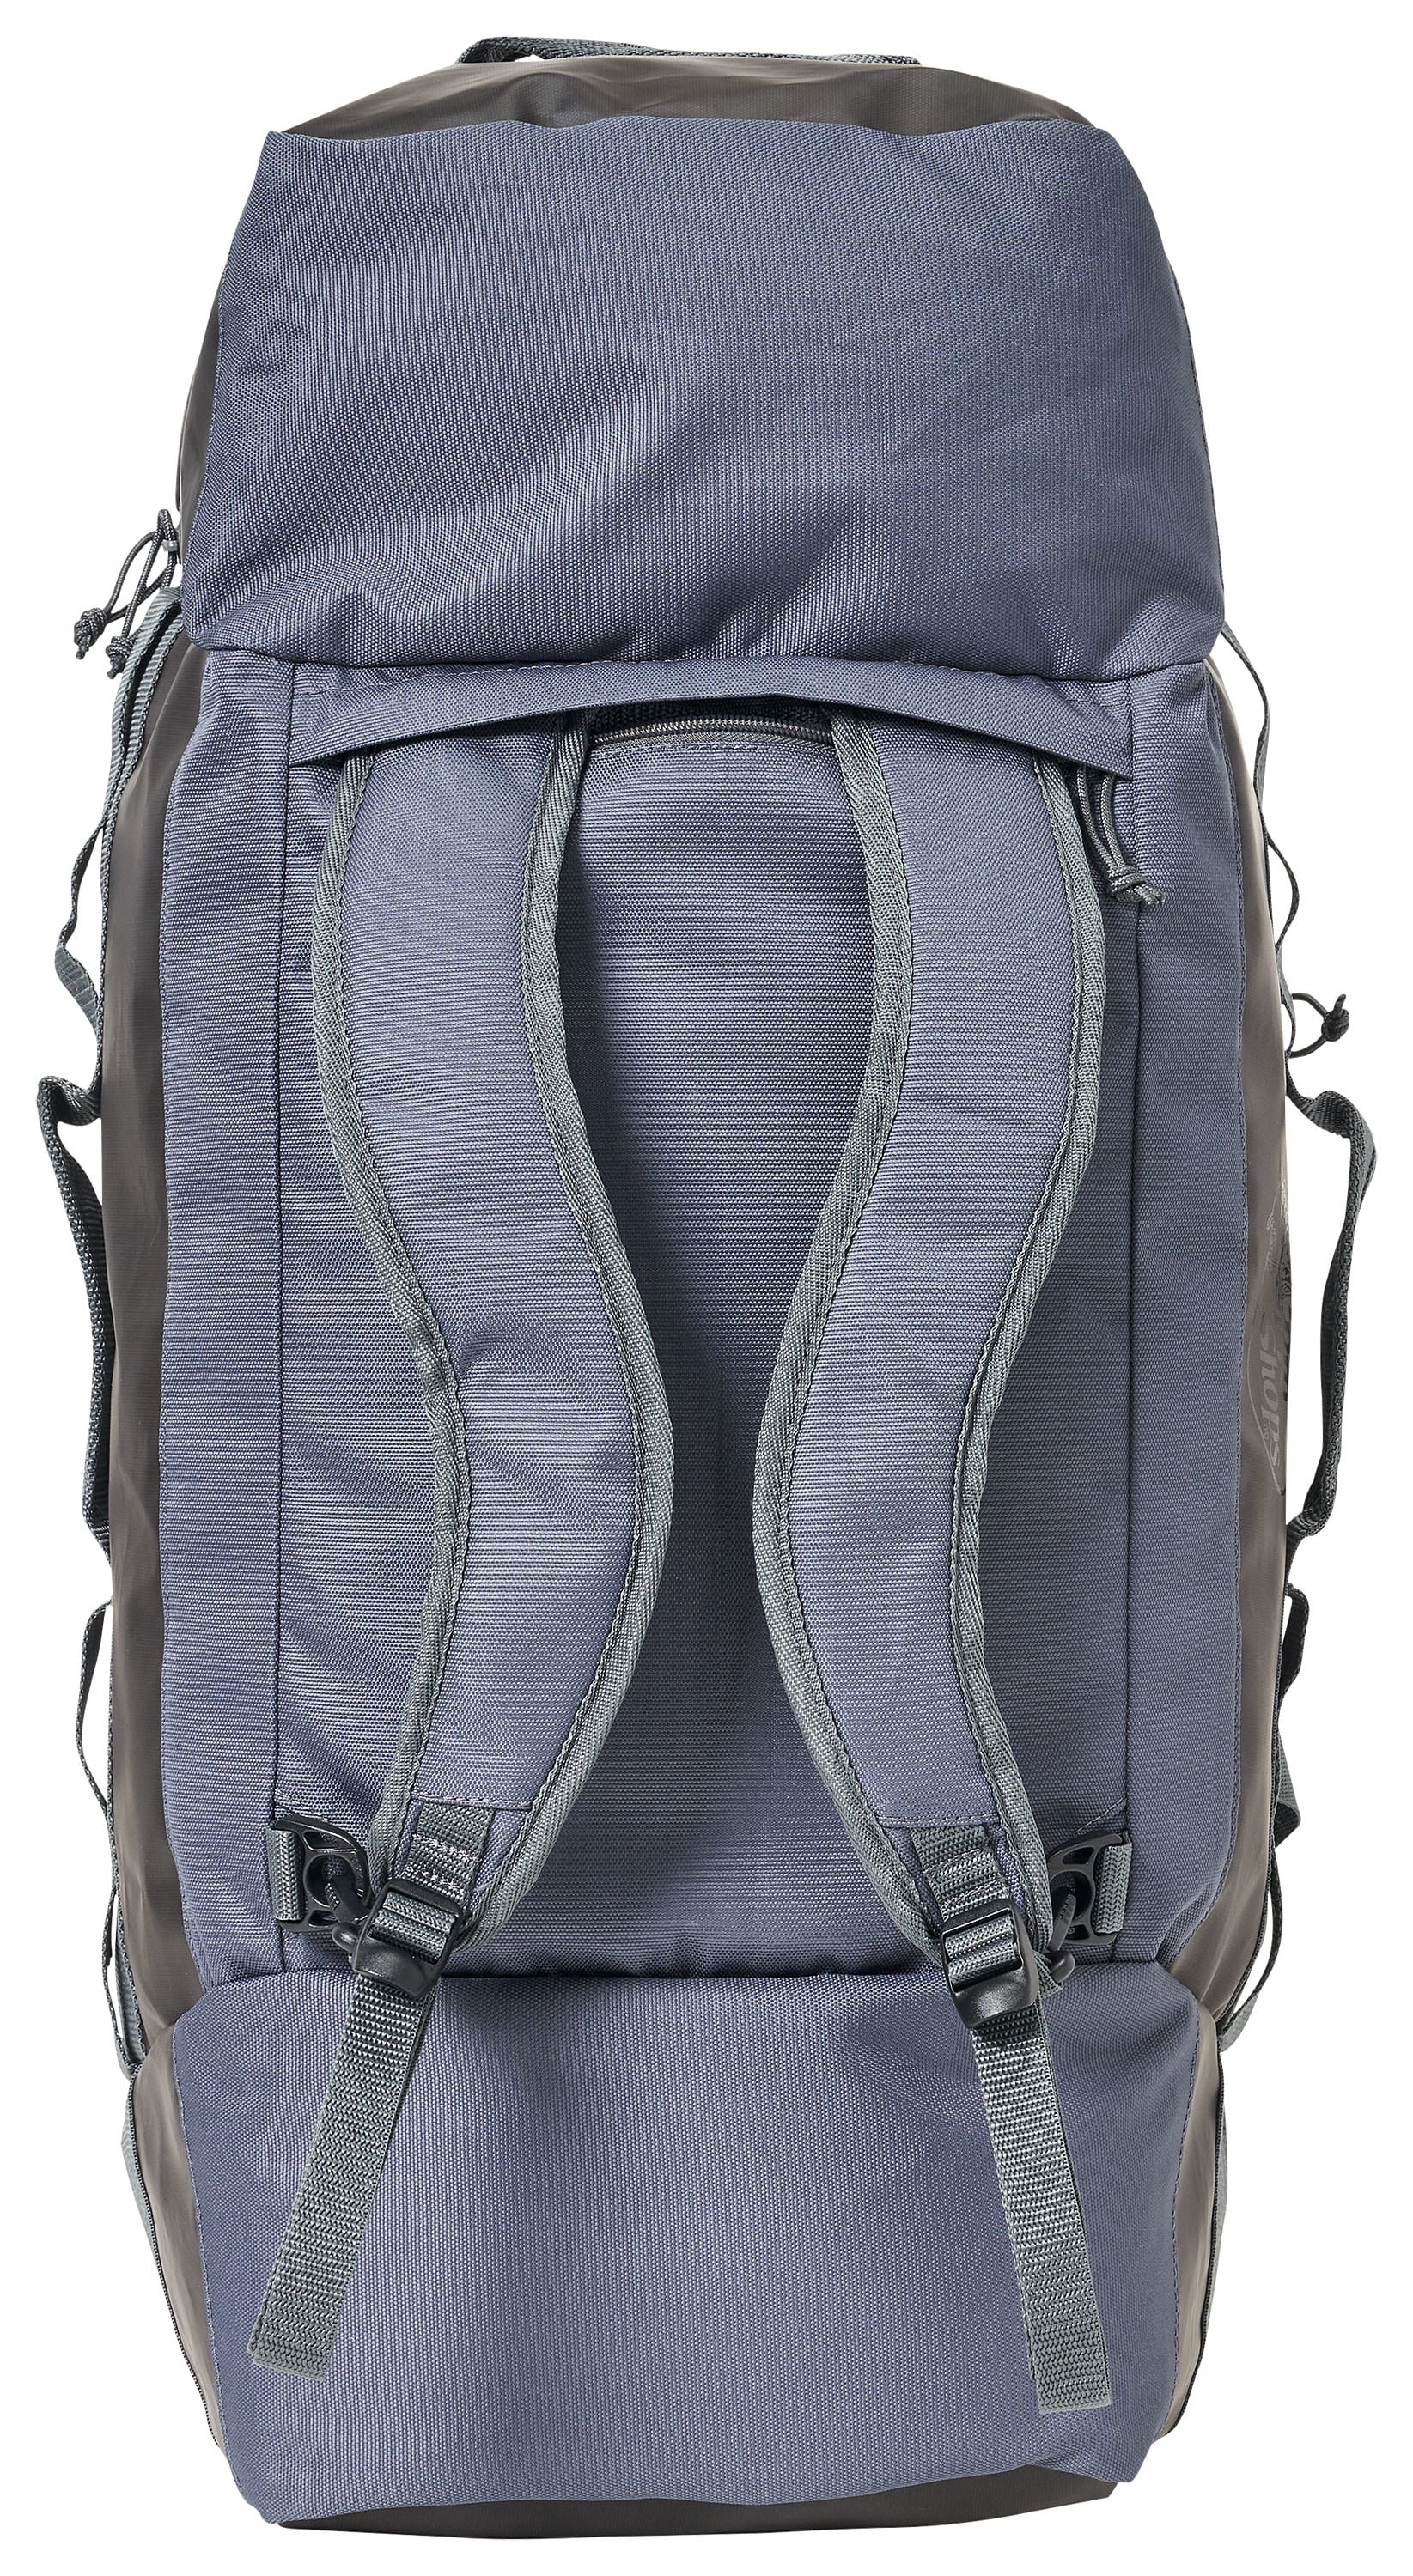 Bass Pro Shops® Heavy-Duty Packable Duffel Bag - 70 Litre - Grey/Black